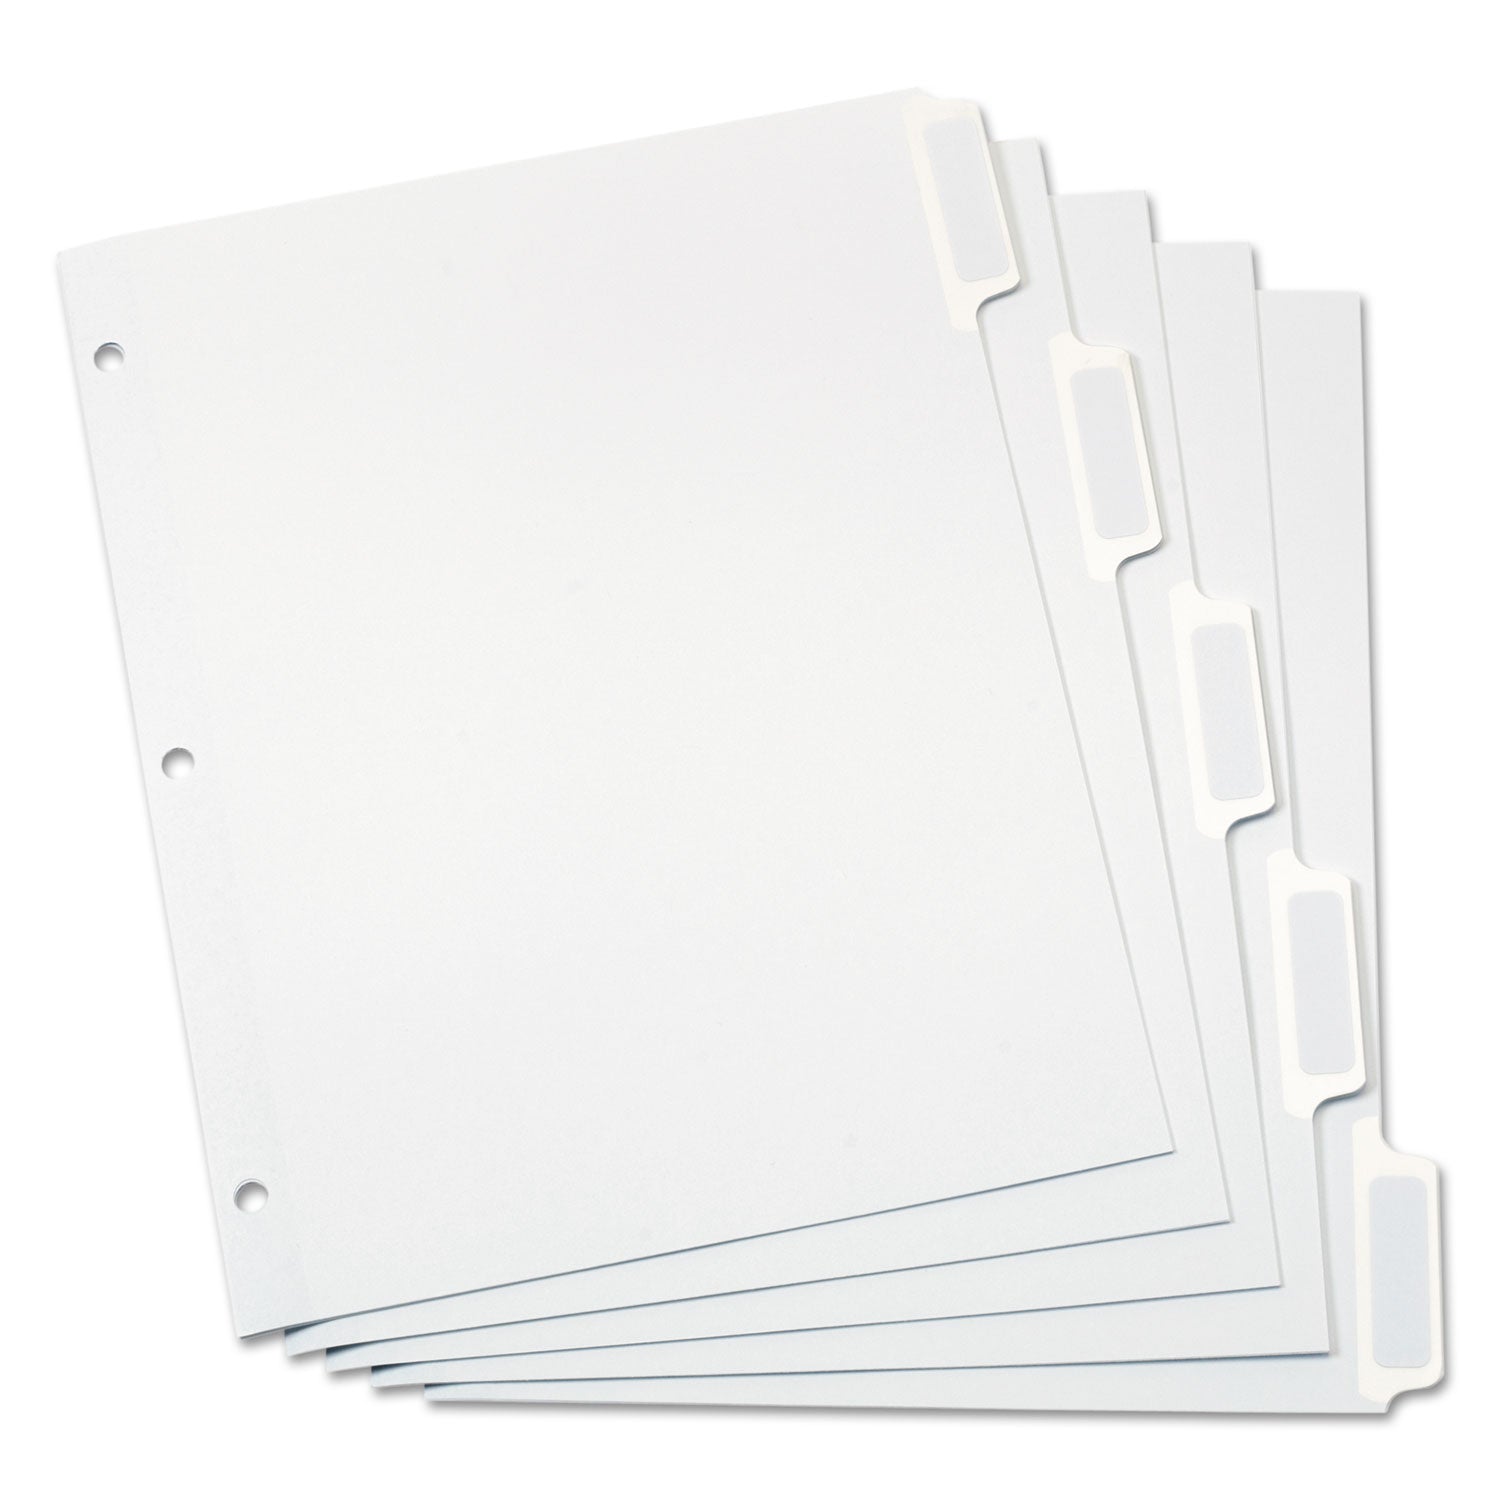 Custom Label Tab Dividers with Self-Adhesive Tab Labels, 5-Tab, 11 x 8.5, White, 25 Sets - 